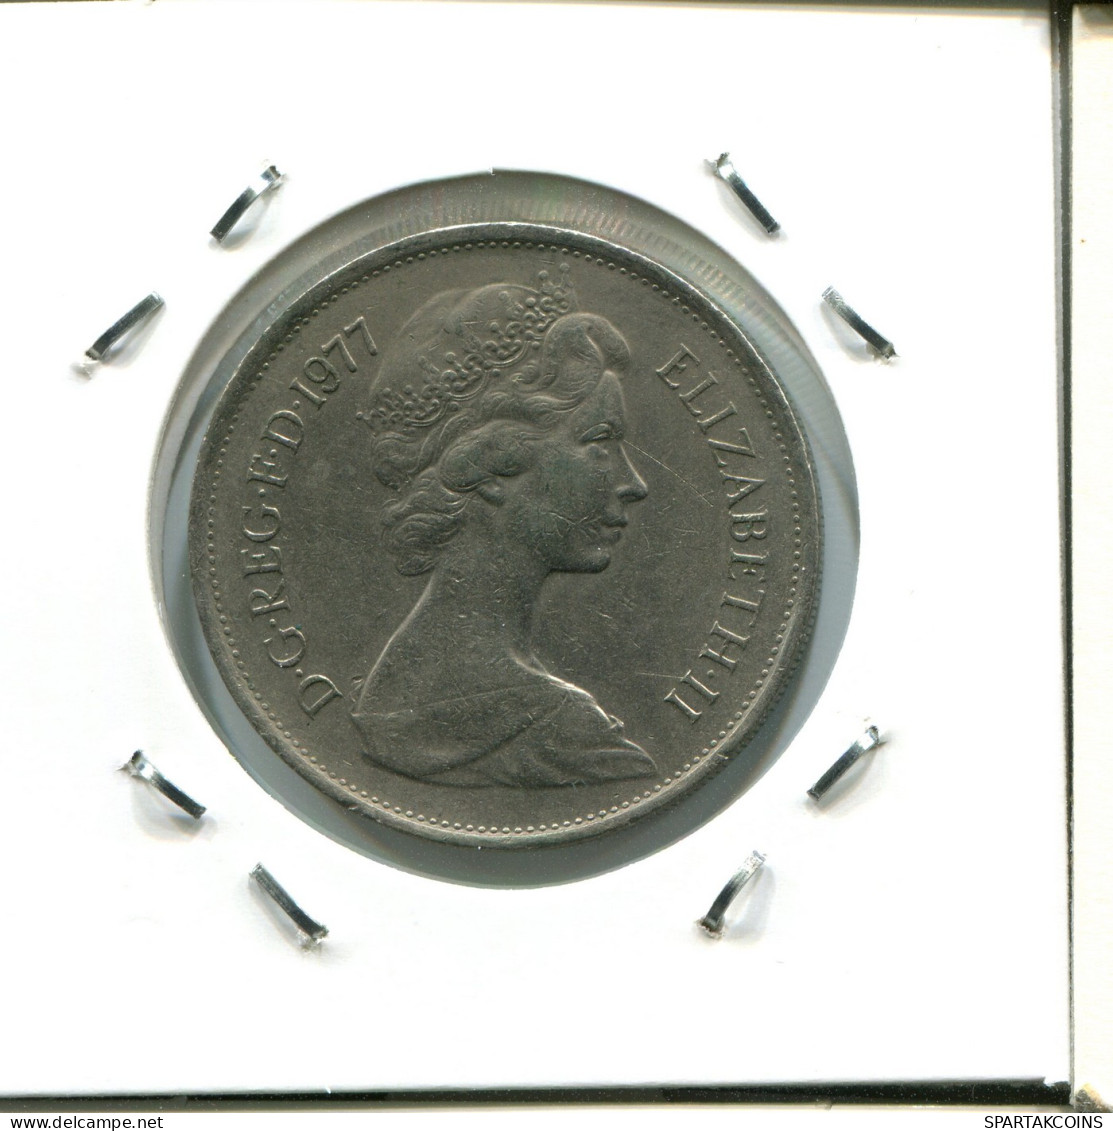 10 PENCE 1977 UK GBAN BRETAÑA GREAT BRITAIN Moneda #AX008.E - 10 Pence & 10 New Pence